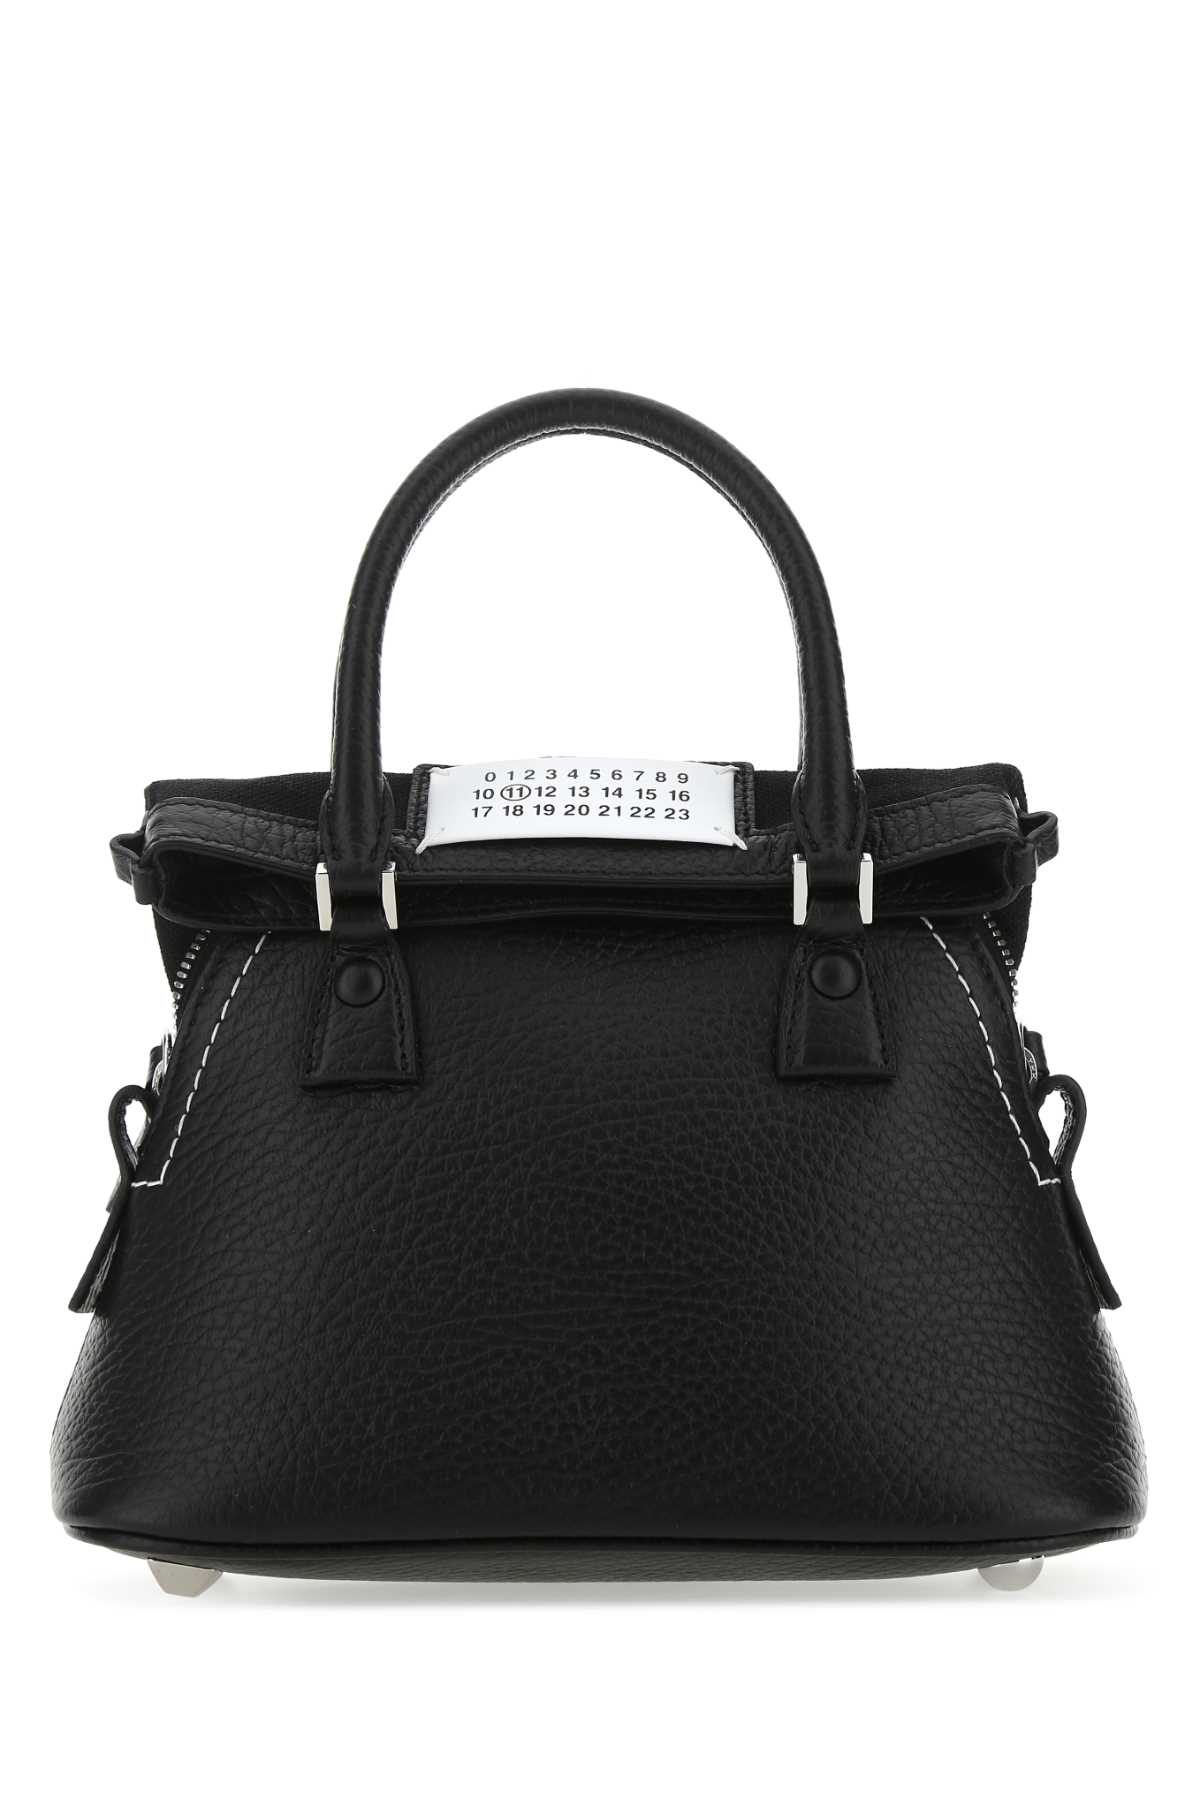 Maison Margiela Black Leather Micro 5ac Handbag In T8013